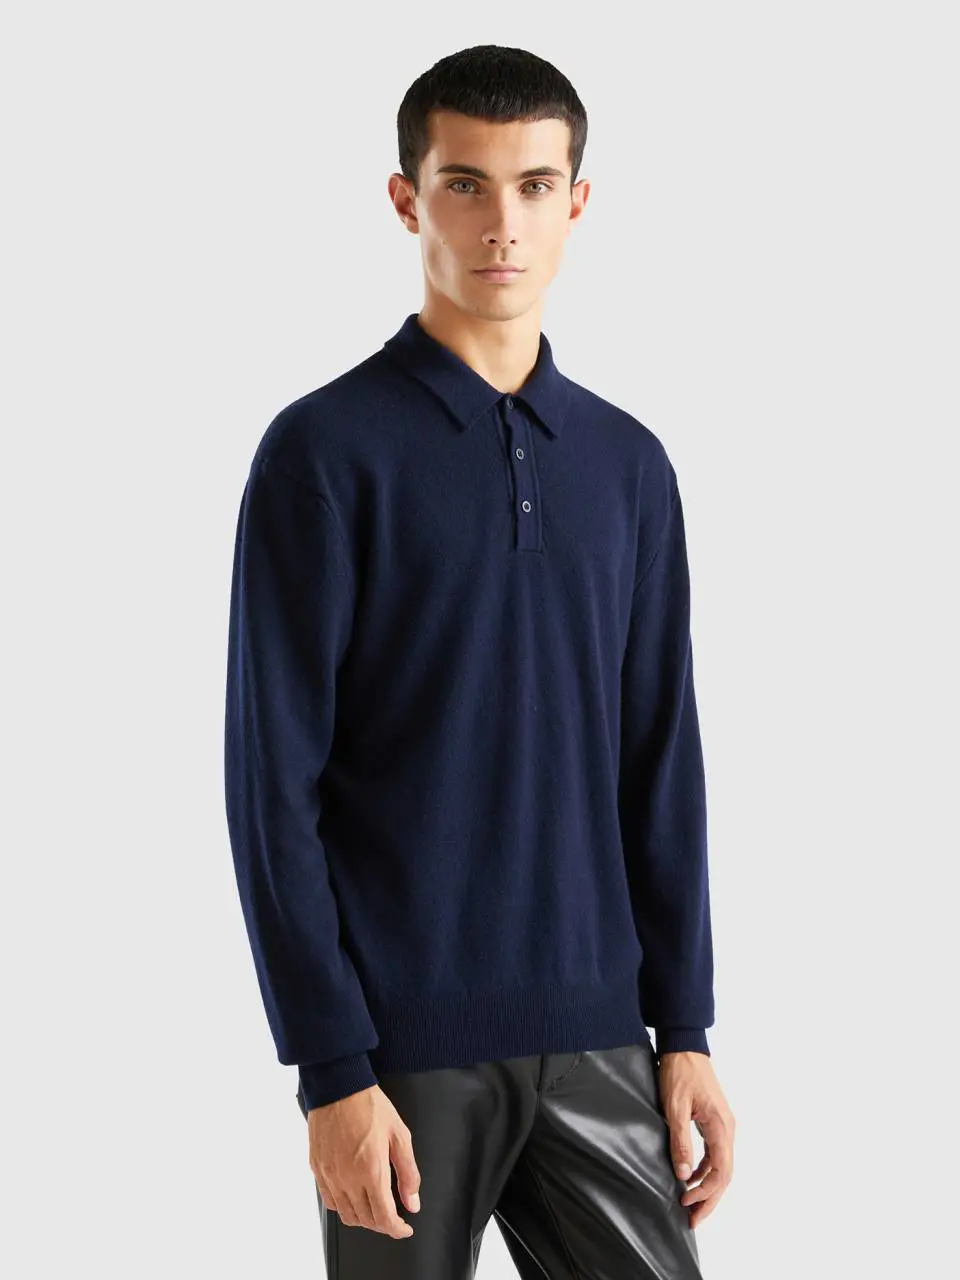 Benetton dark blue polo shirt in pure merino wool. 1